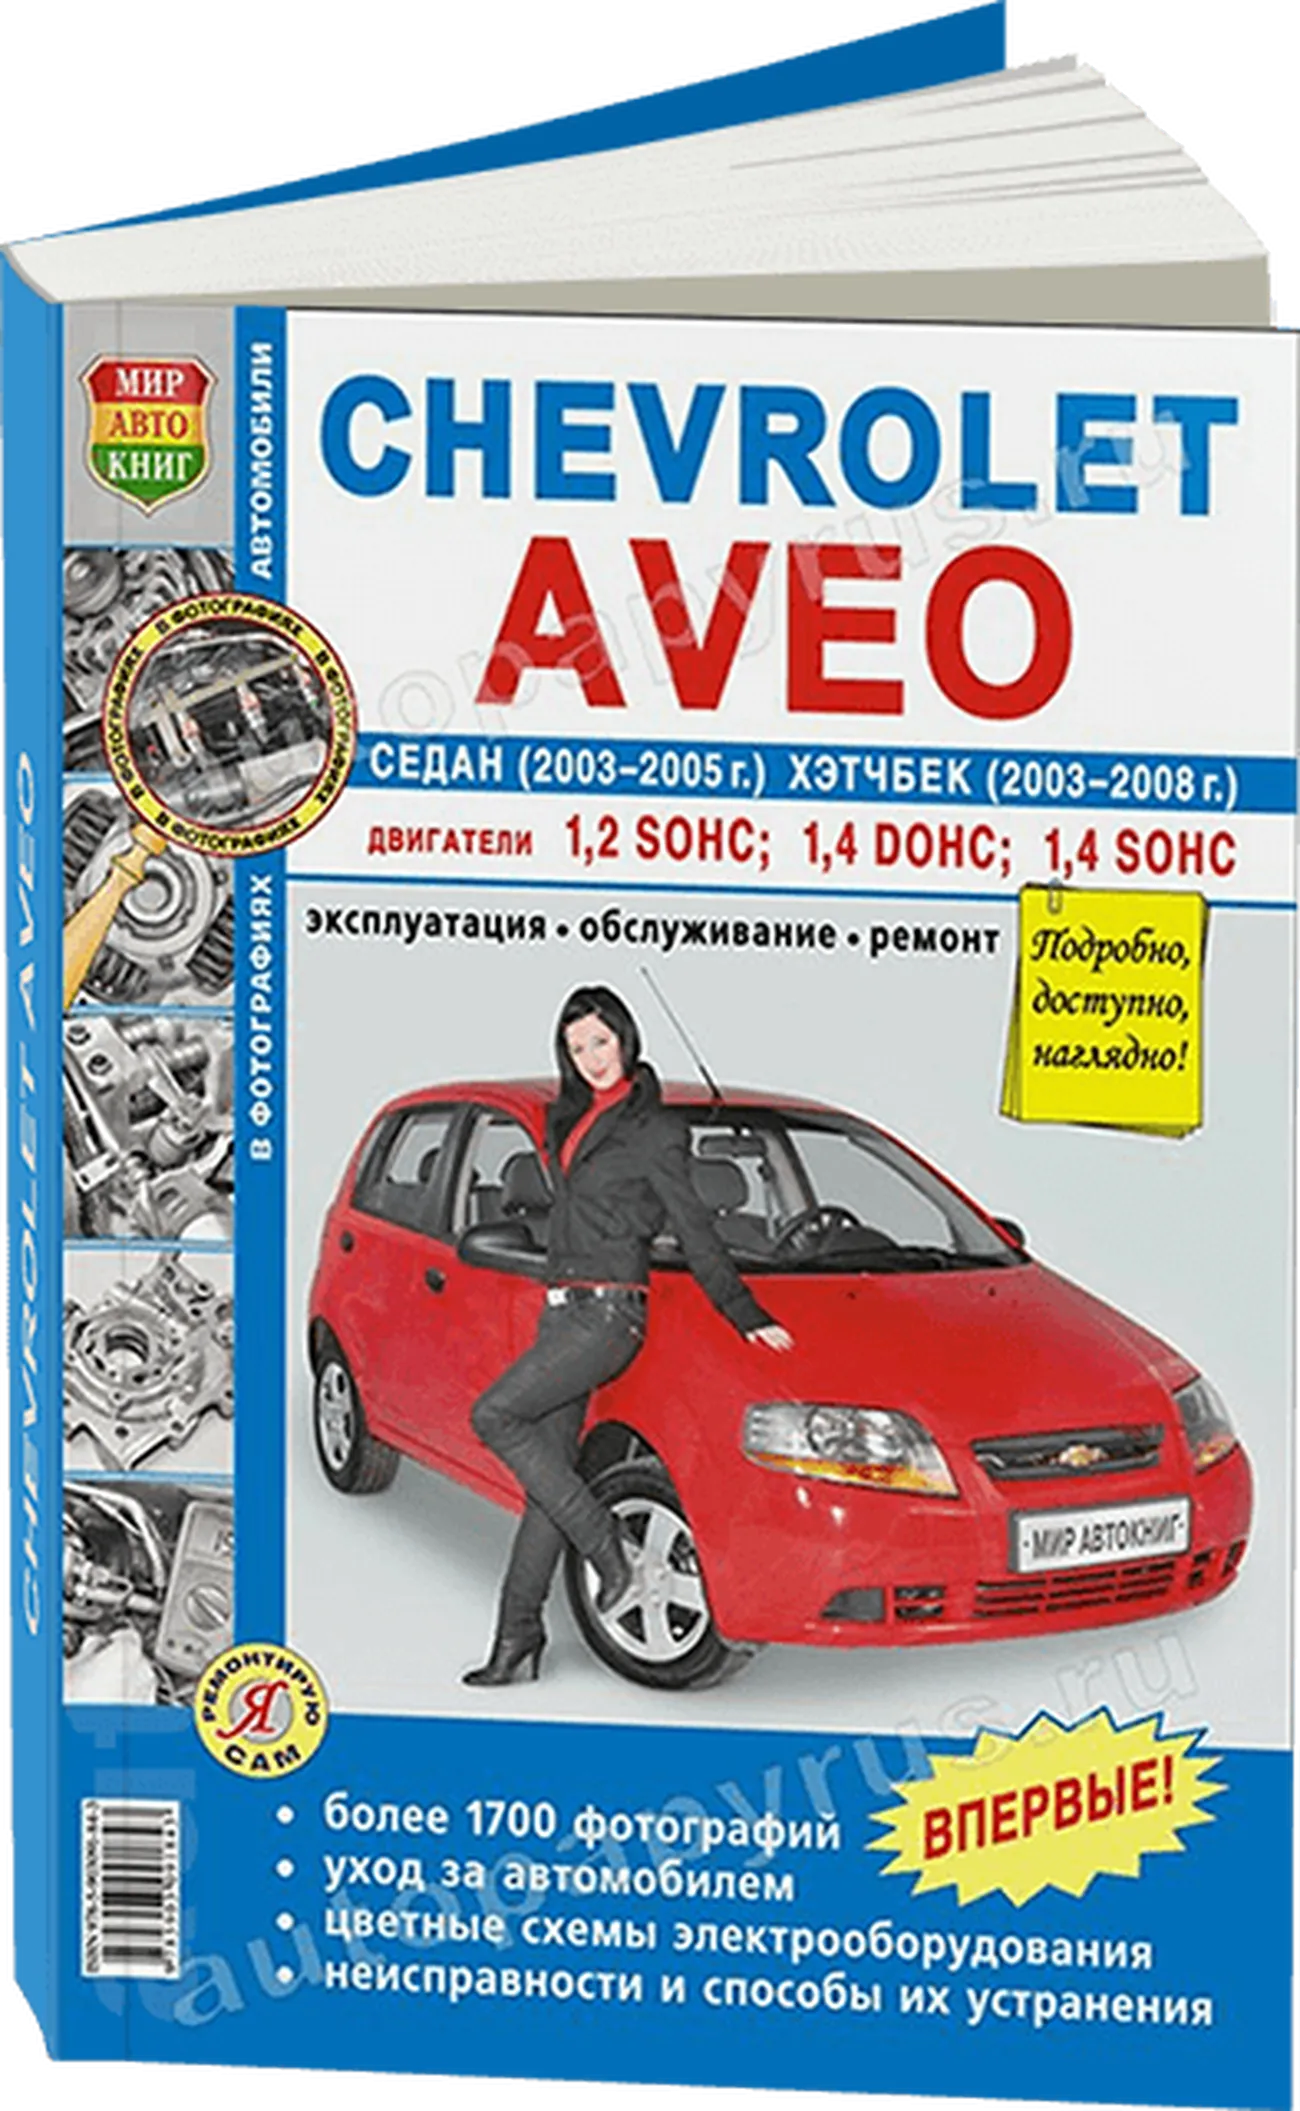 Книга: CHEVROLET AVEO (б) 2003-2008 г.в., рем., экспл., то, Ч/Б фото., сер. ЯРС | Мир Автокниг